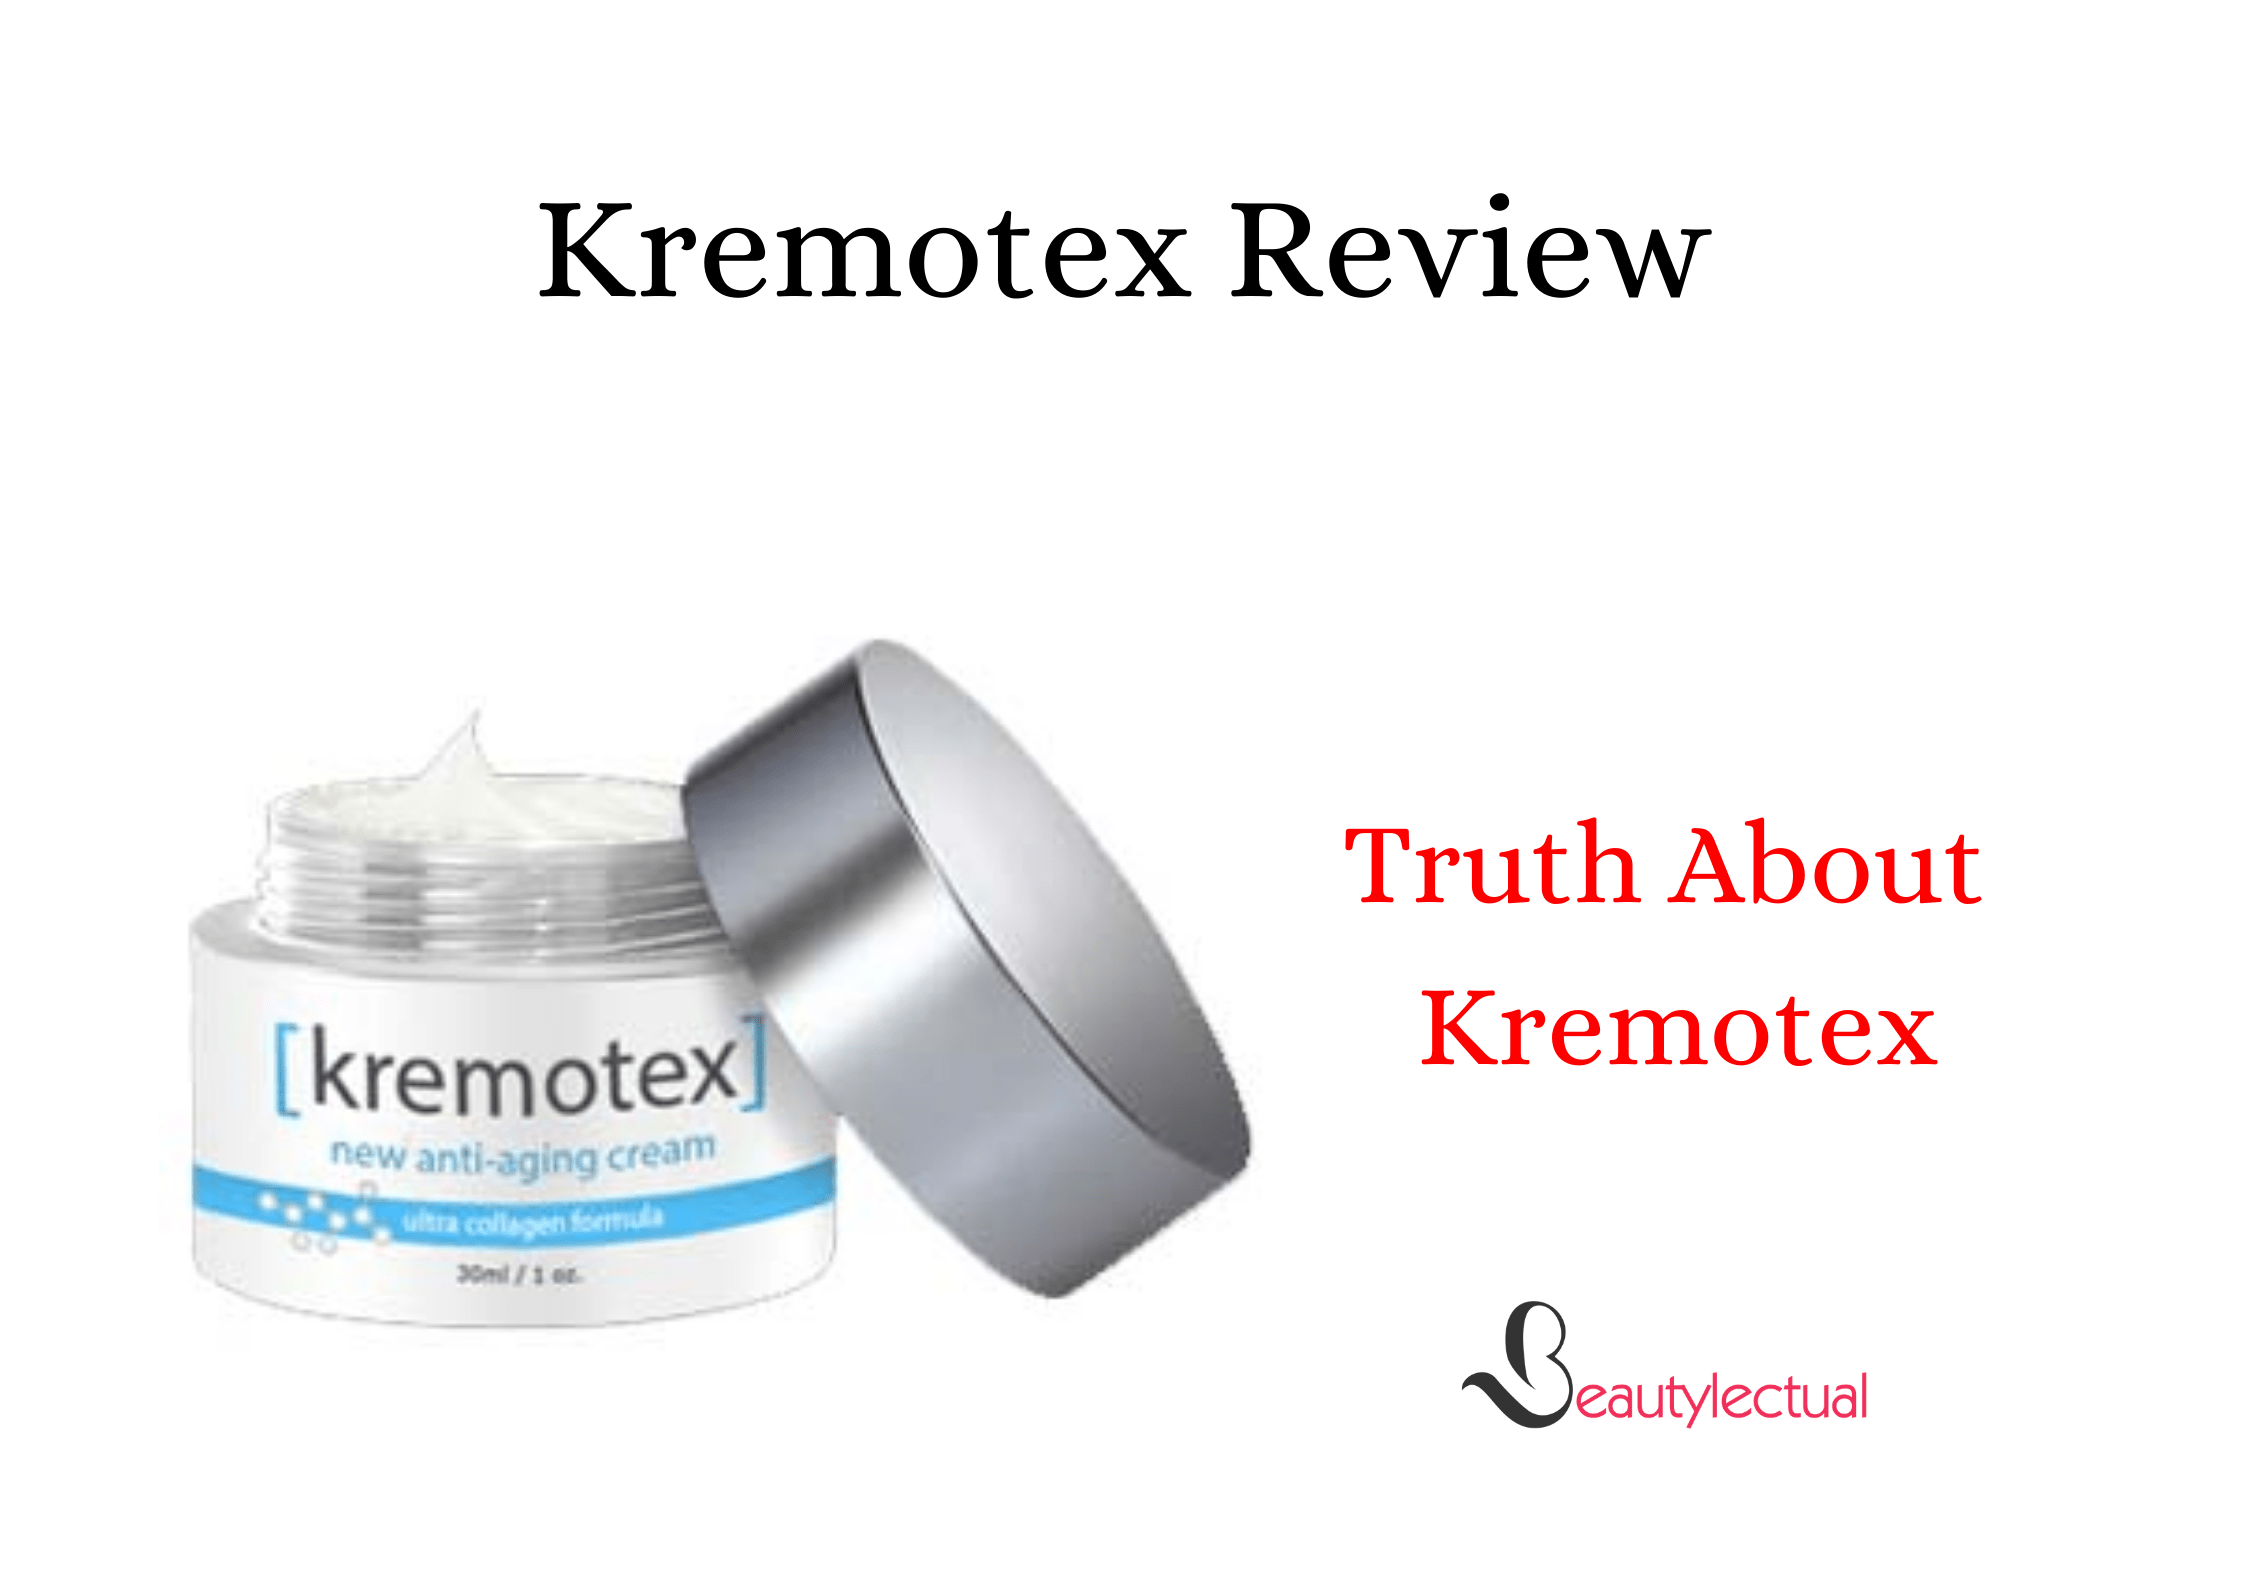 Kremotex Review